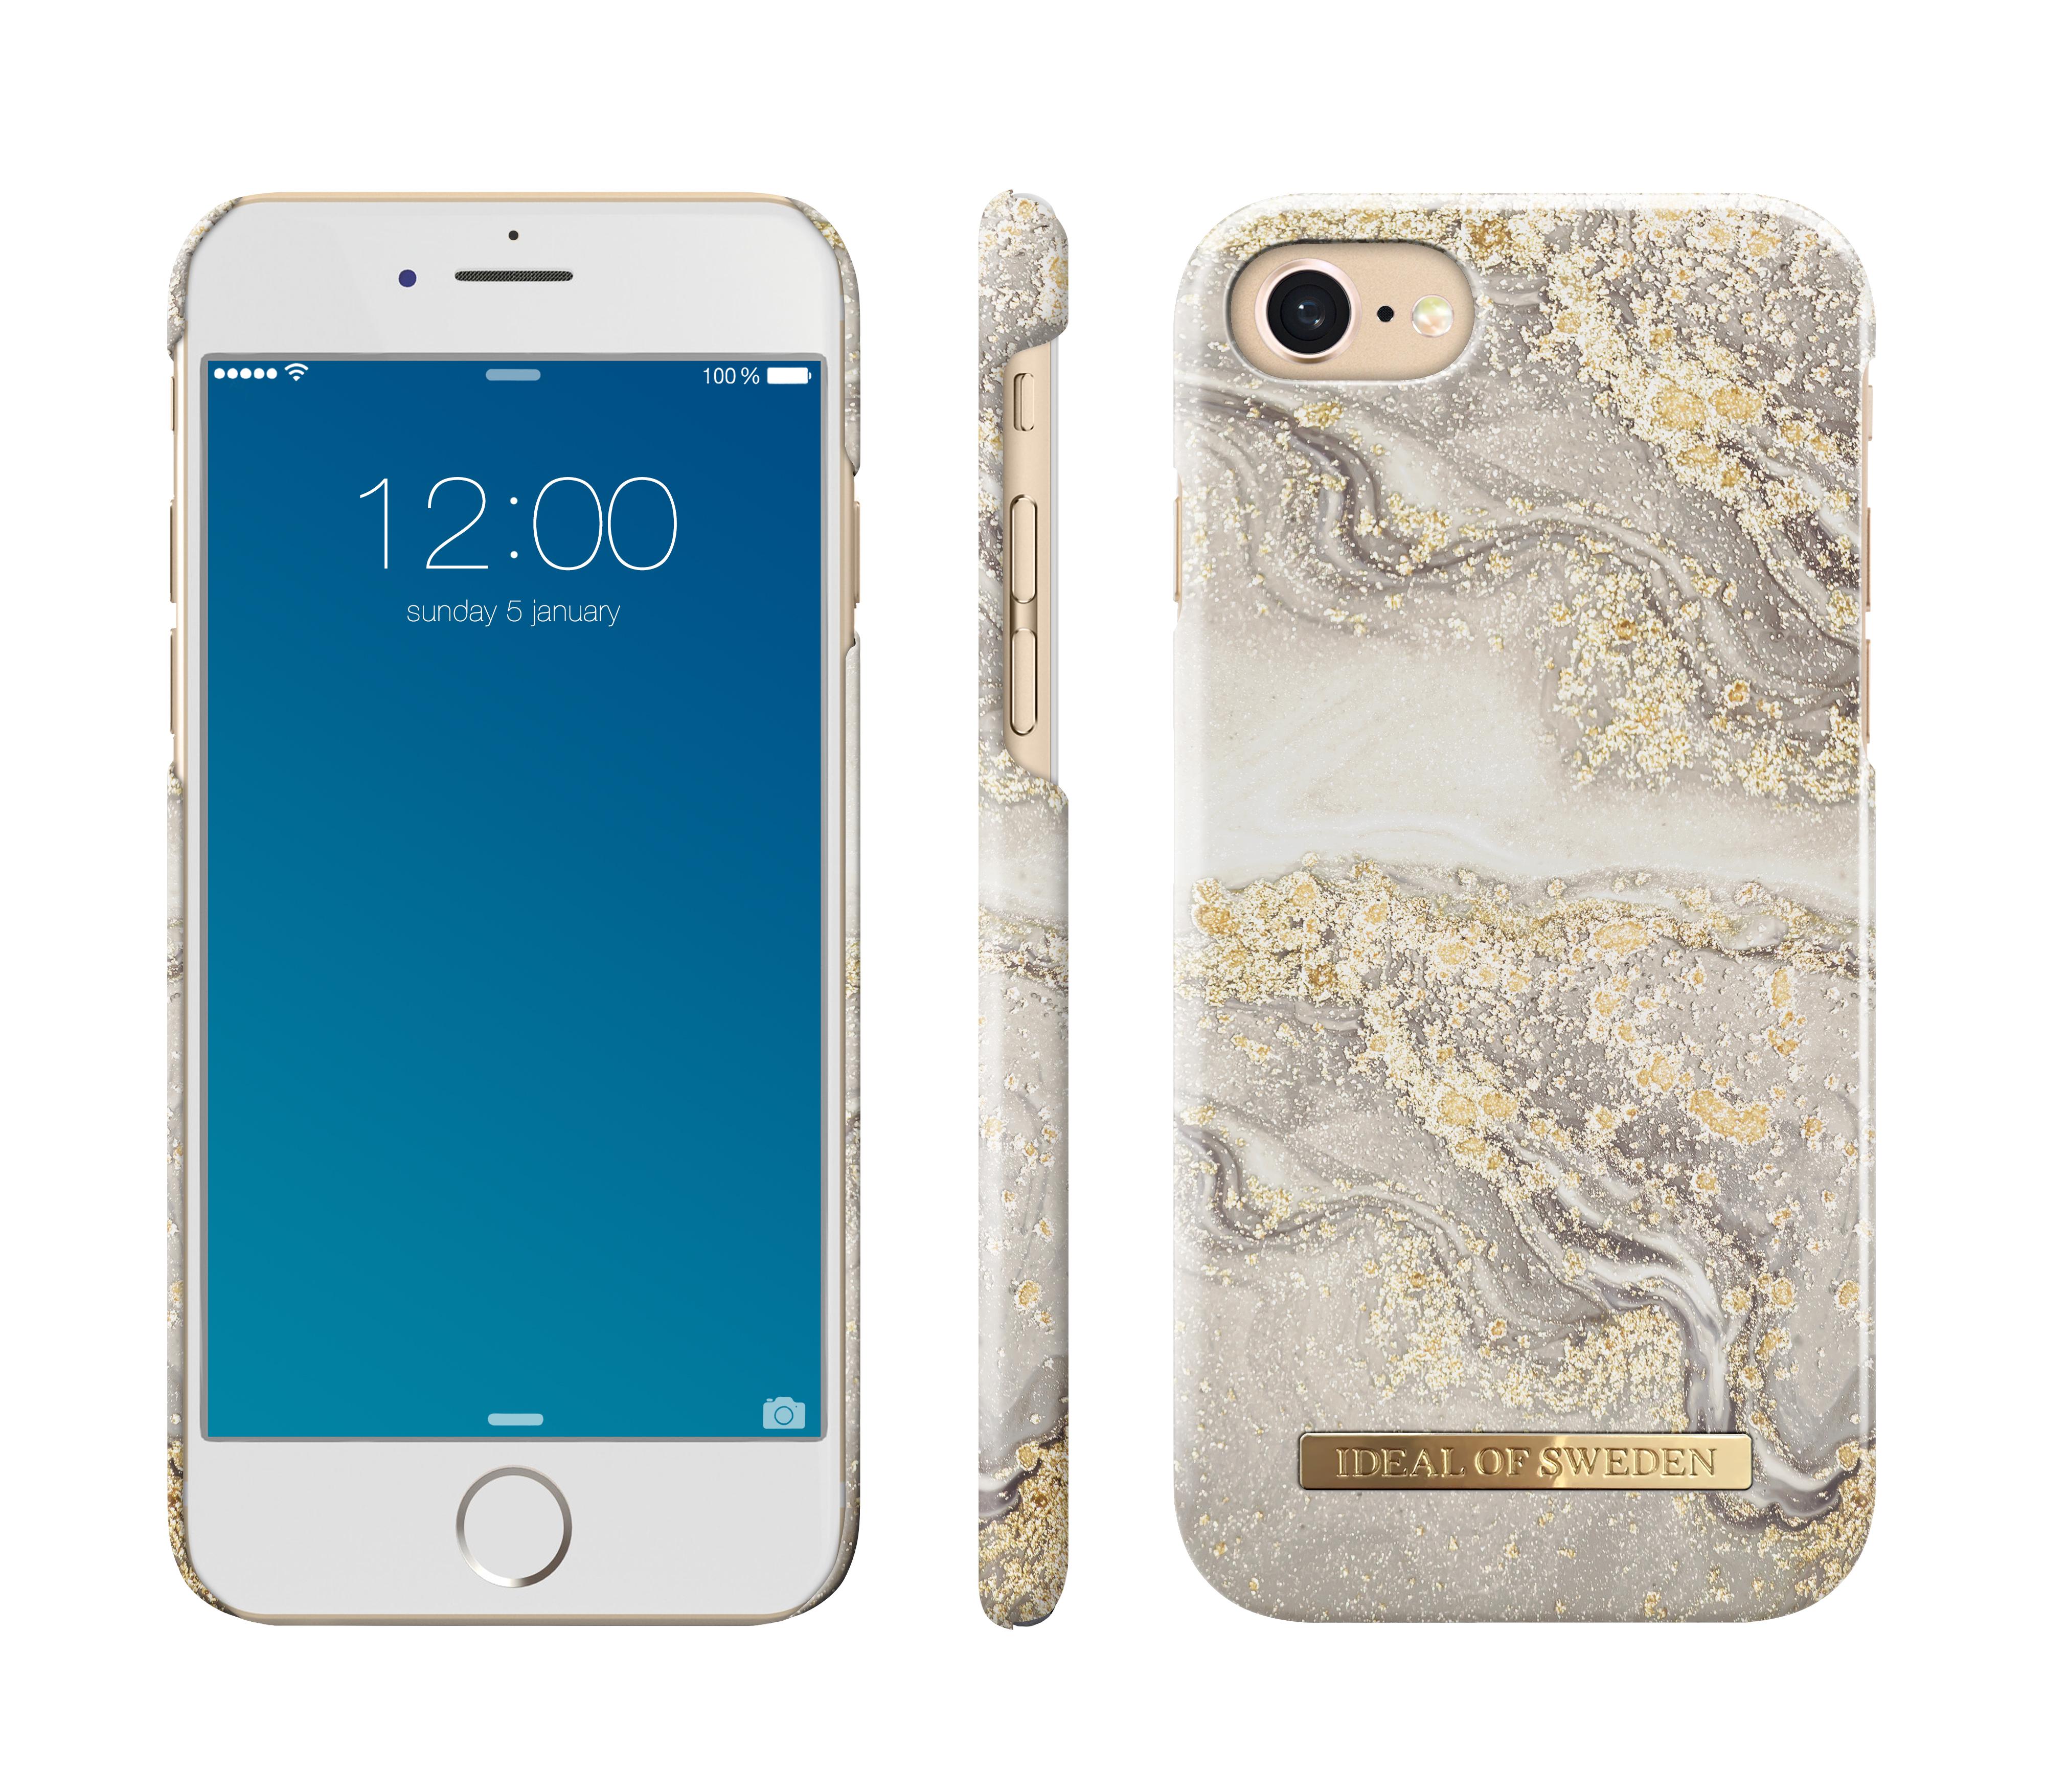 Fashion Case iPhone 7/8/SE Sparke Grey Marble